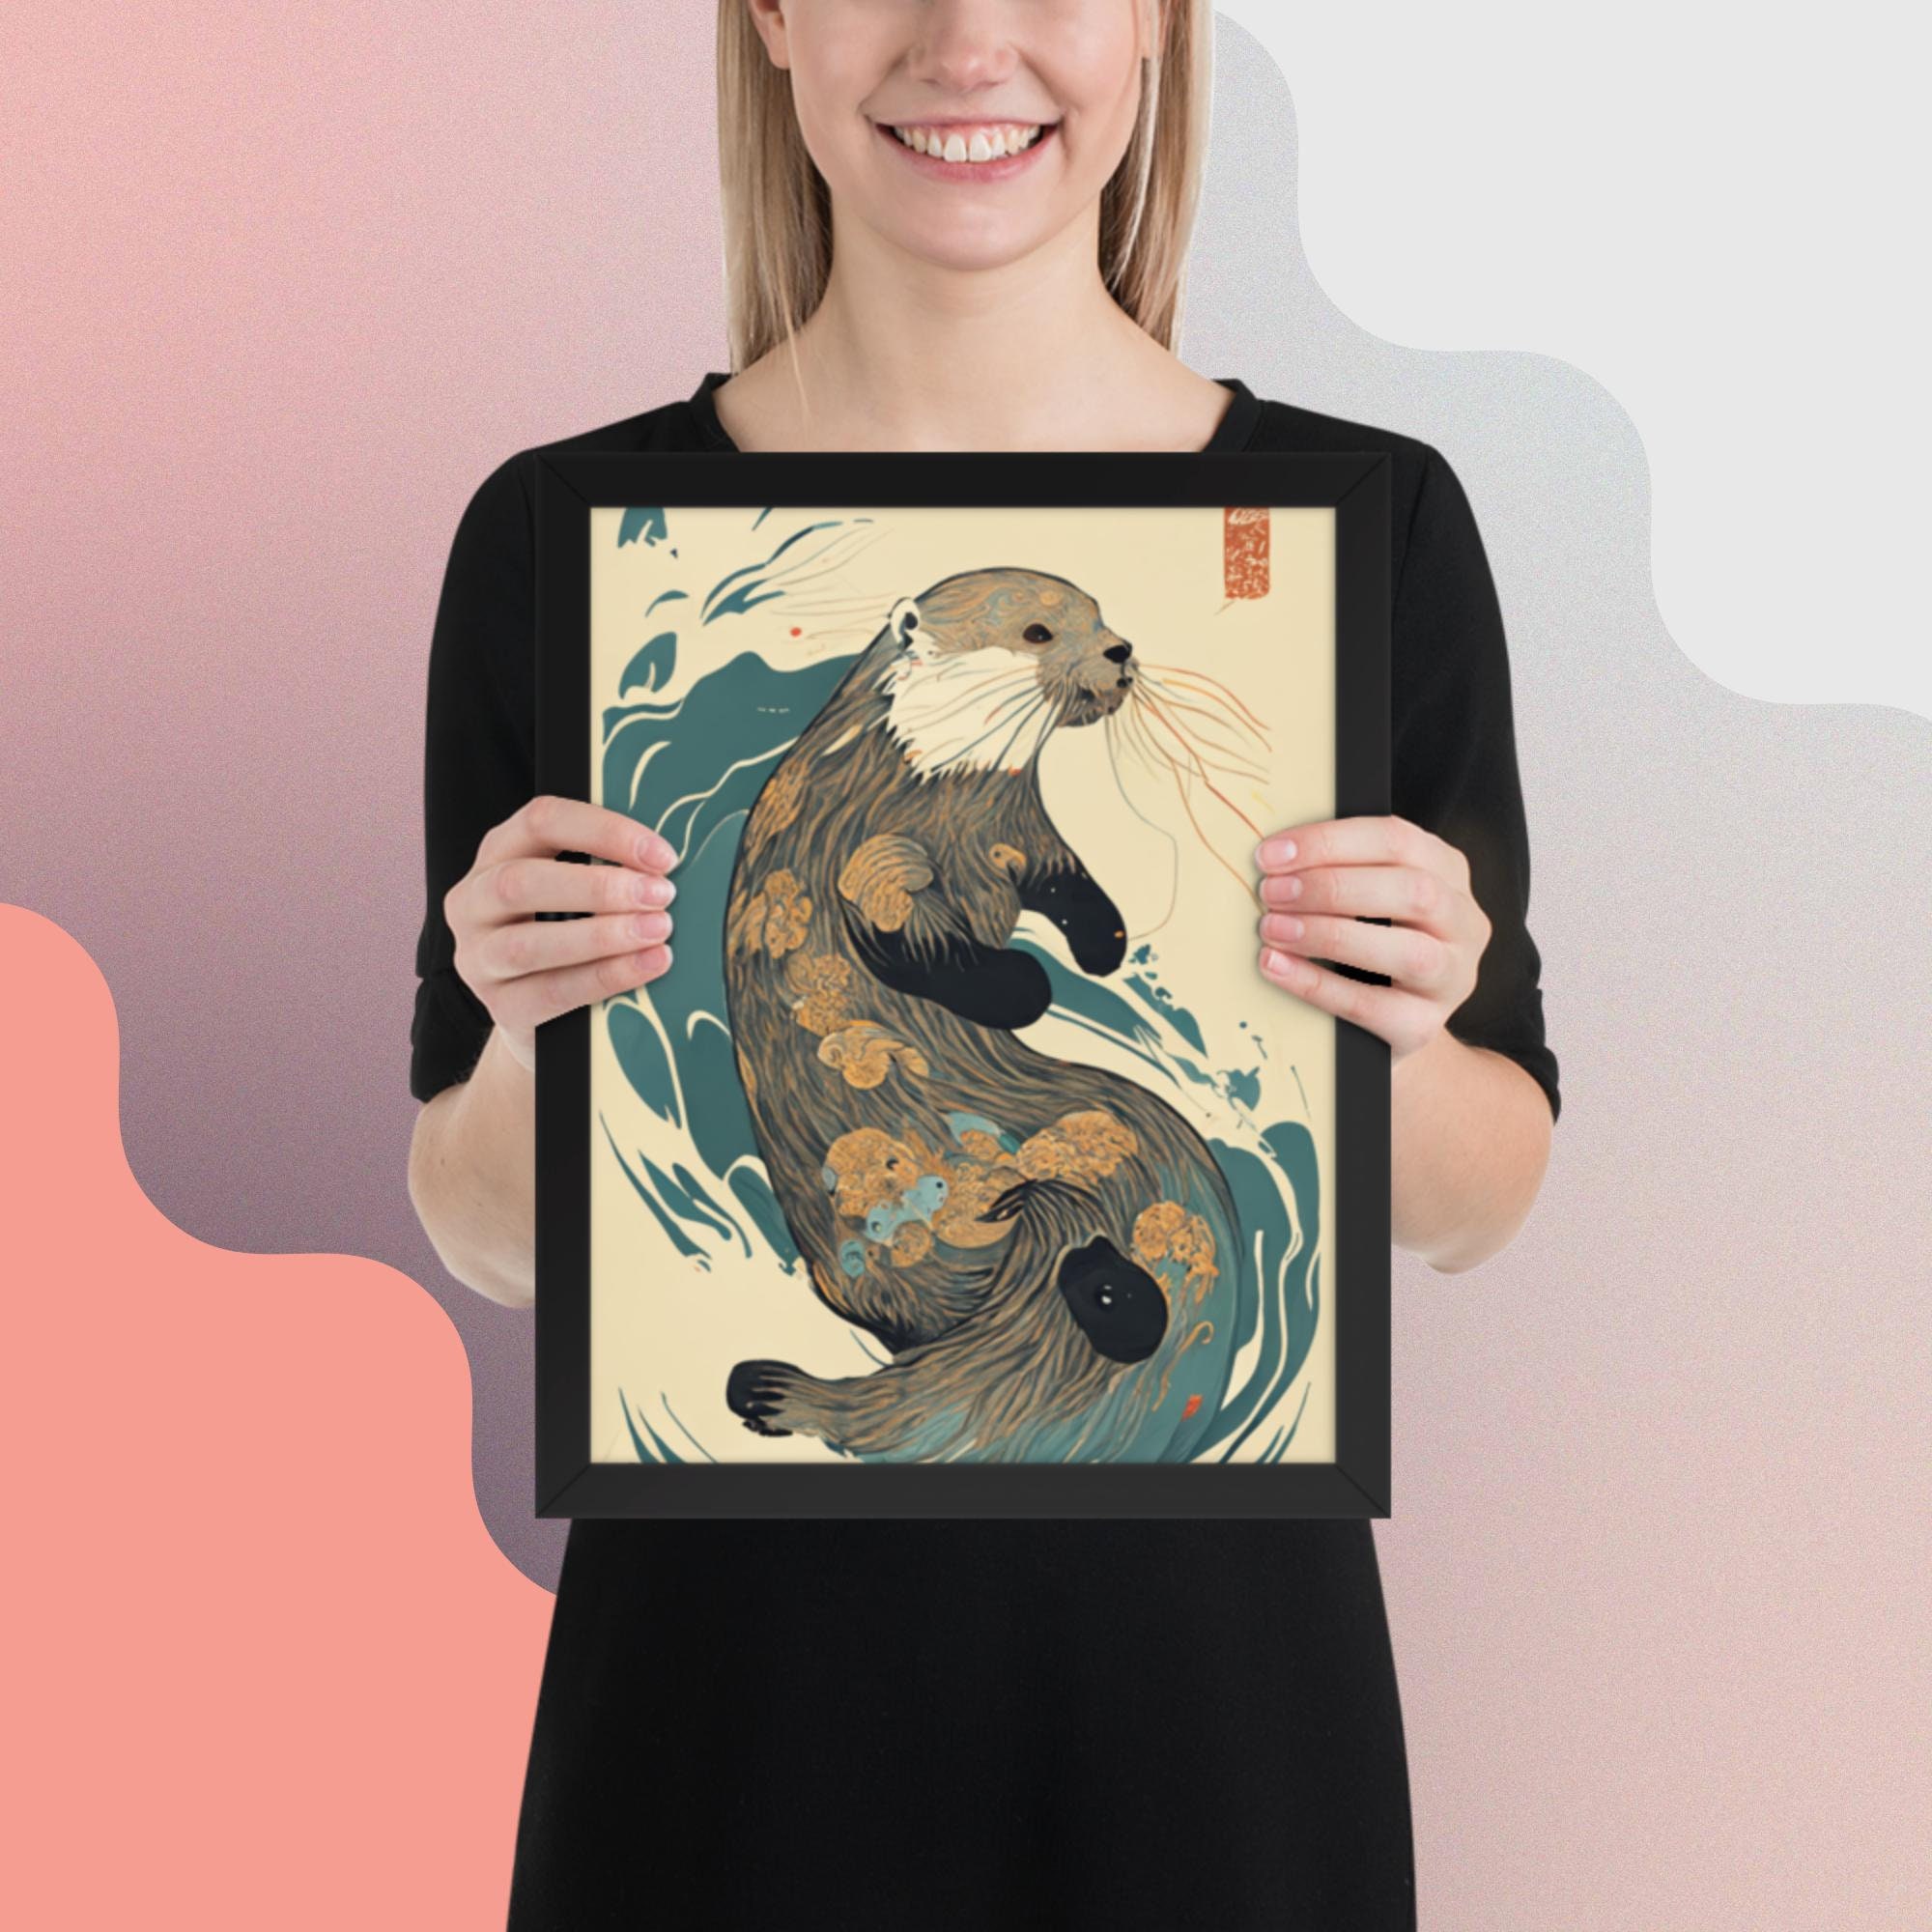 Discover Otter Premium Japanese Otter Abstract Poster - Ocean Art, Zen Decor, Wall Art, No Frame